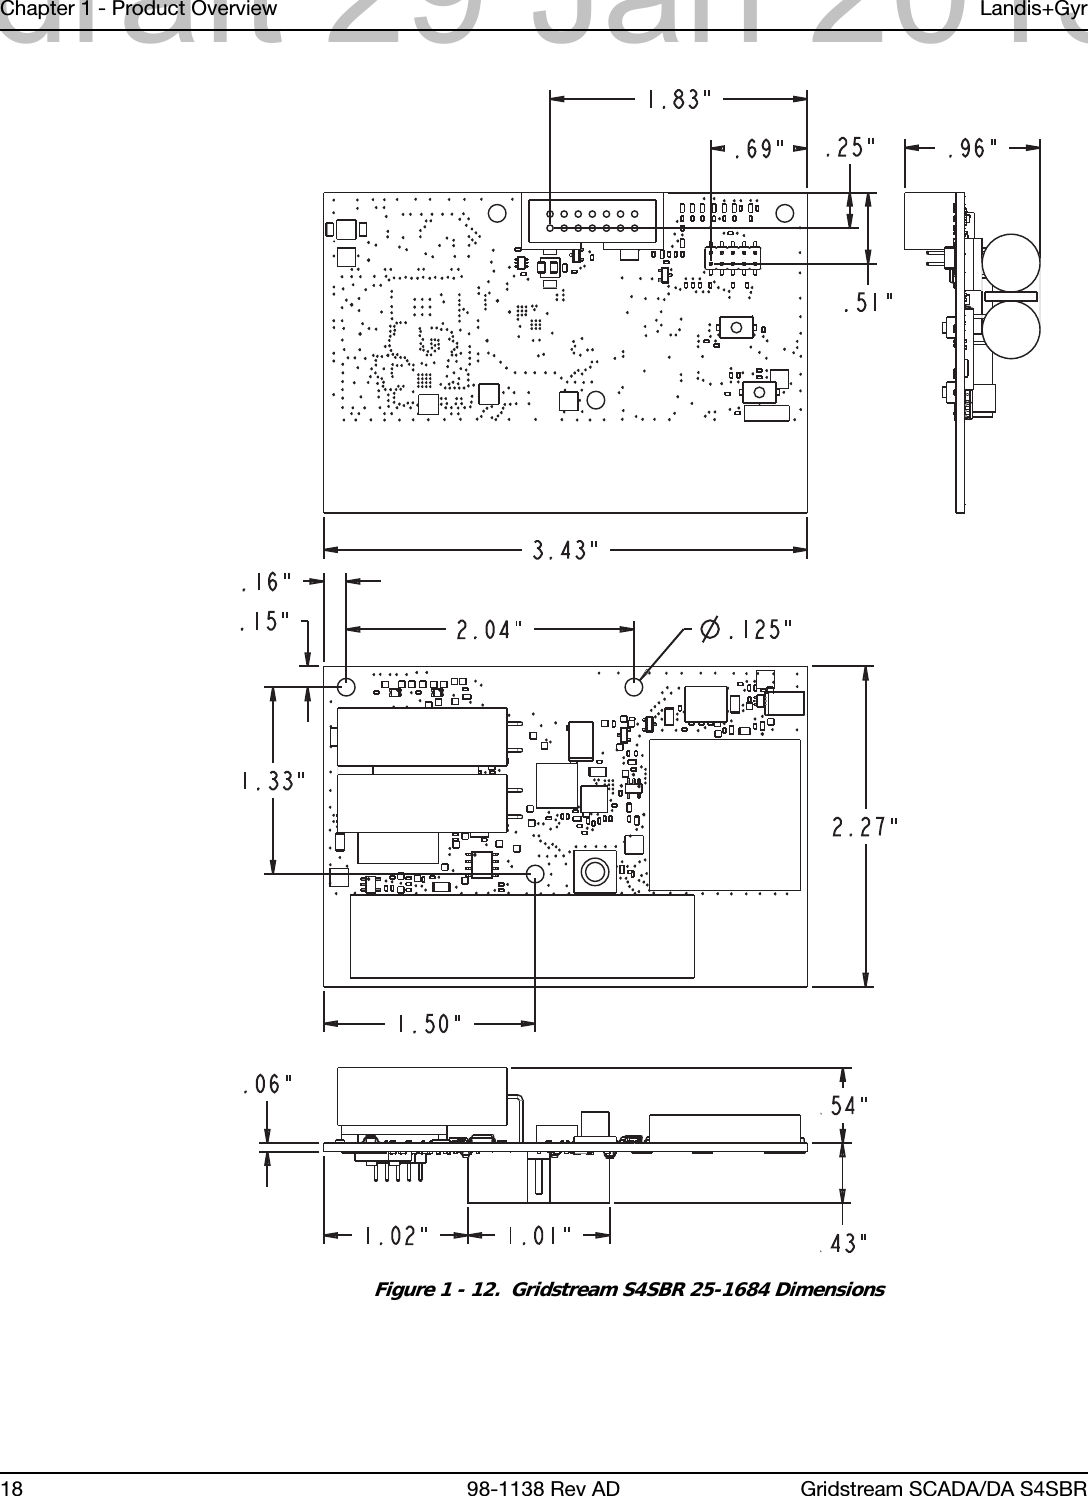 Chapter 1 - Product Overview Landis+Gyr18 98-1138 Rev AD Gridstream SCADA/DA S4SBRFigure 1 - 12.  Gridstream S4SBR 25-1684 Dimensionsdraft 29 Jan 2013